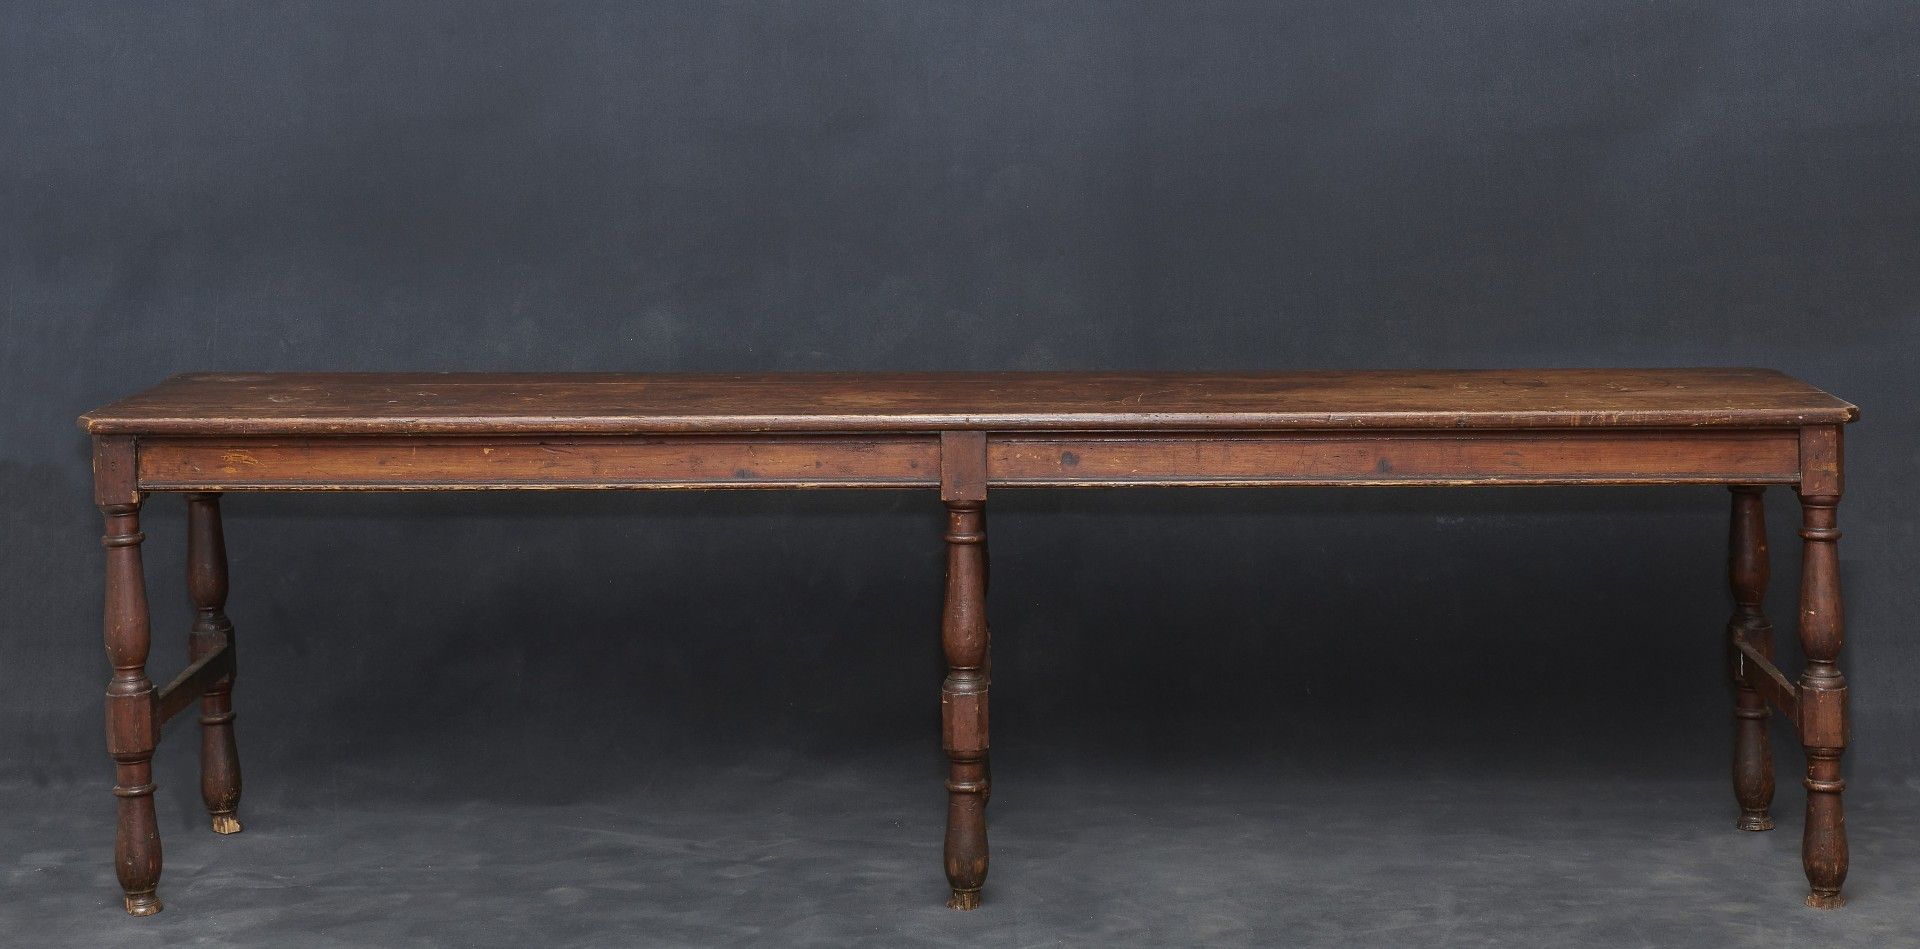 Null 大型工作桌 18-19世纪 胡桃木，用横木连接的转腿。


脚部有损坏，有磨损和轻微崩裂。79.5 x 285 x 61 厘米